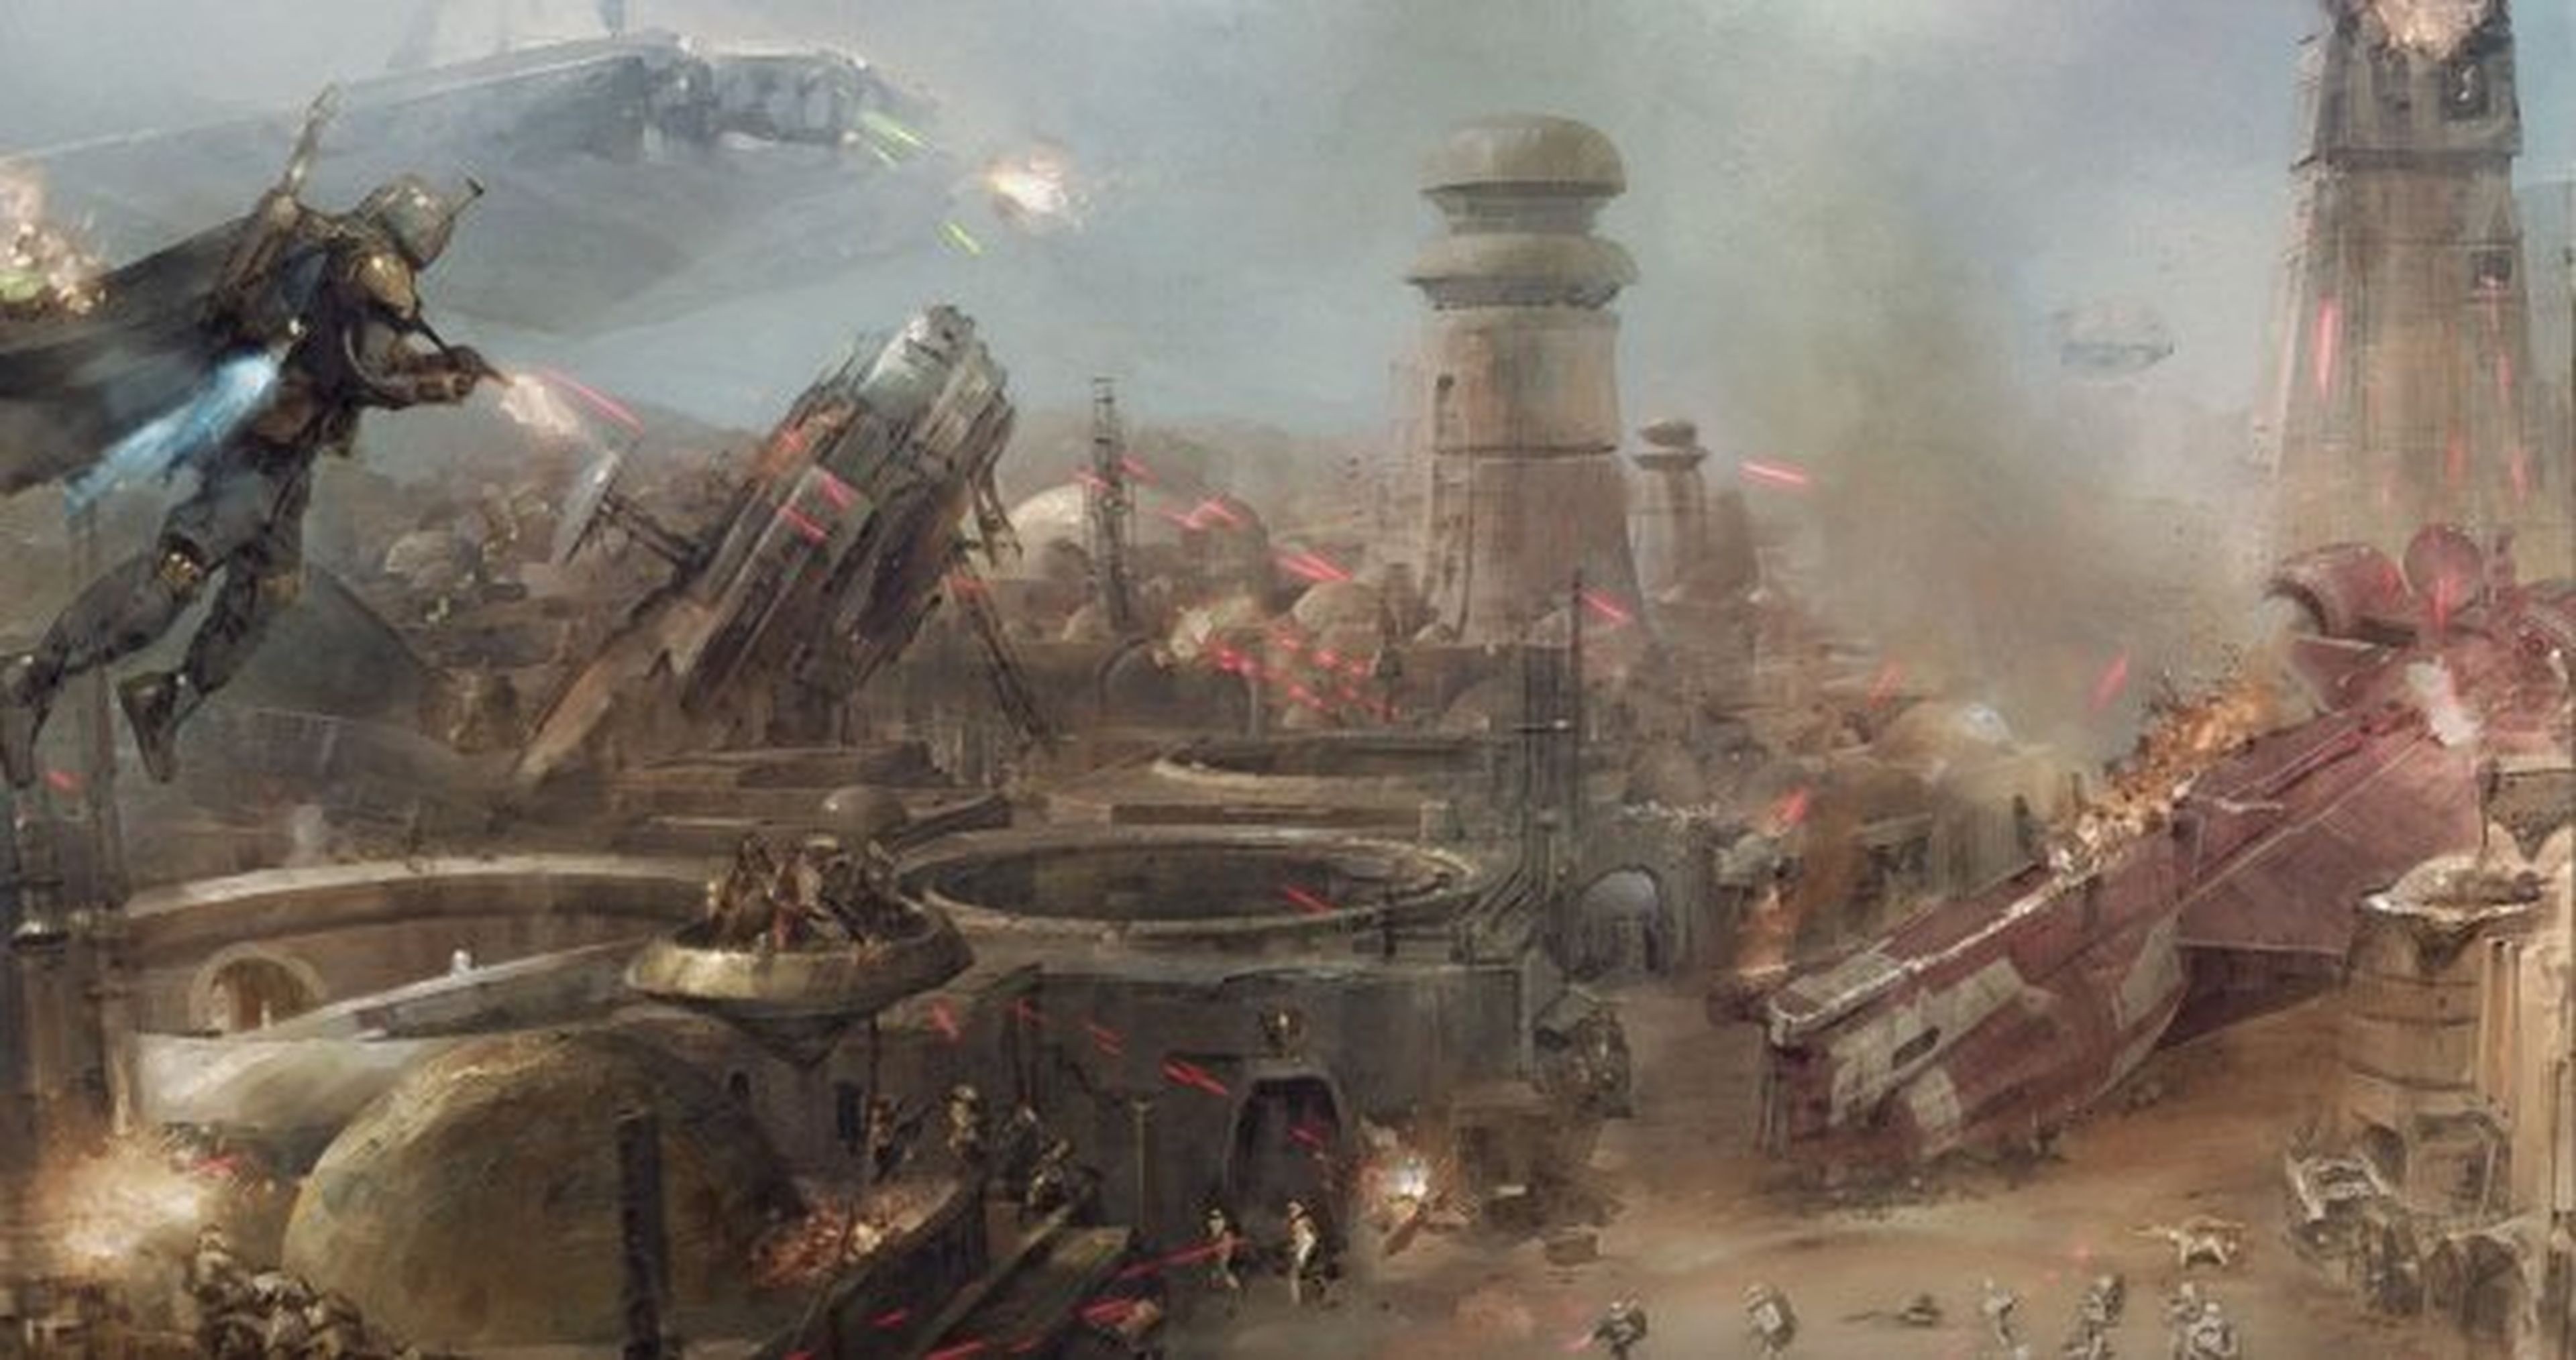 Detalles y rumores sobre Star Wars Battlefront